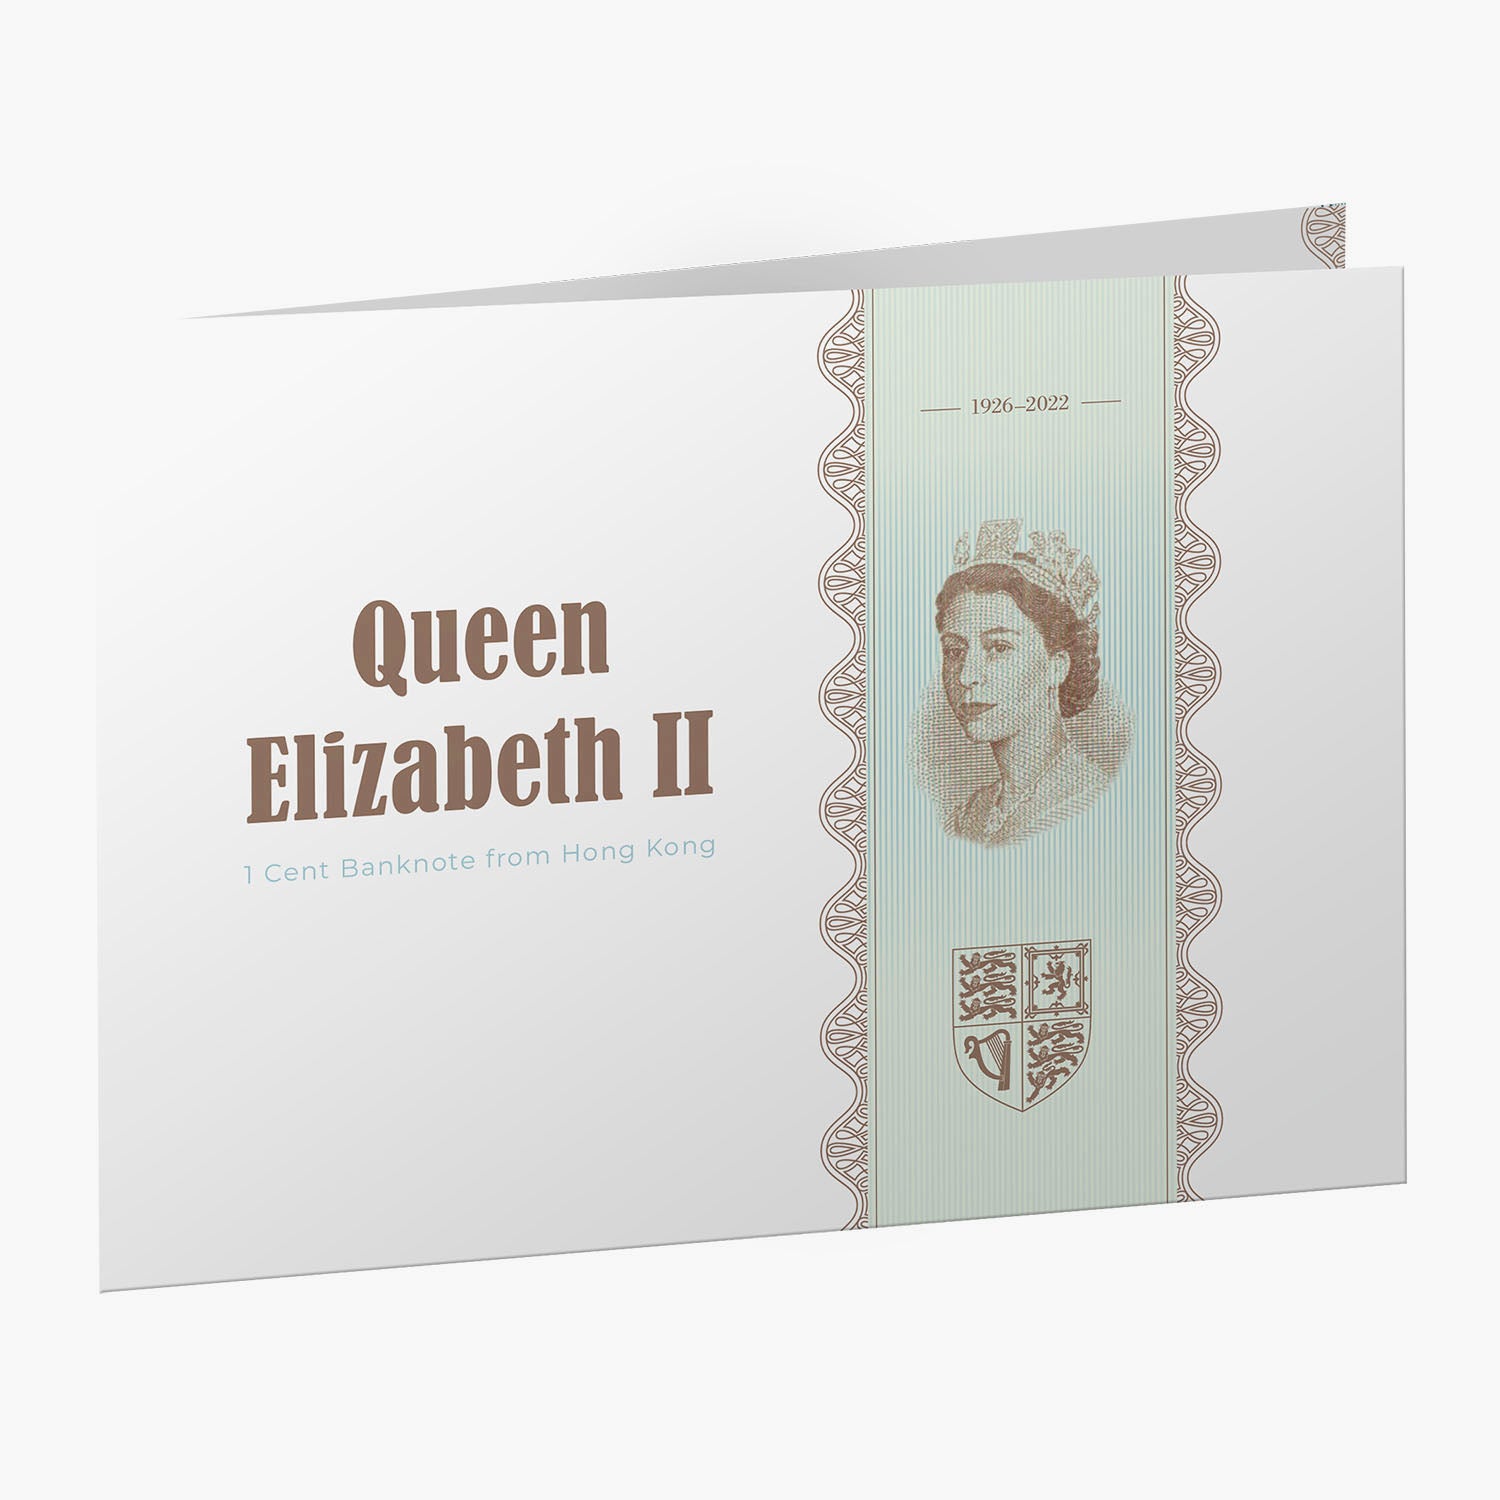 Her Majesty Queen Elizabeth II Royal Hong Kong Banknote